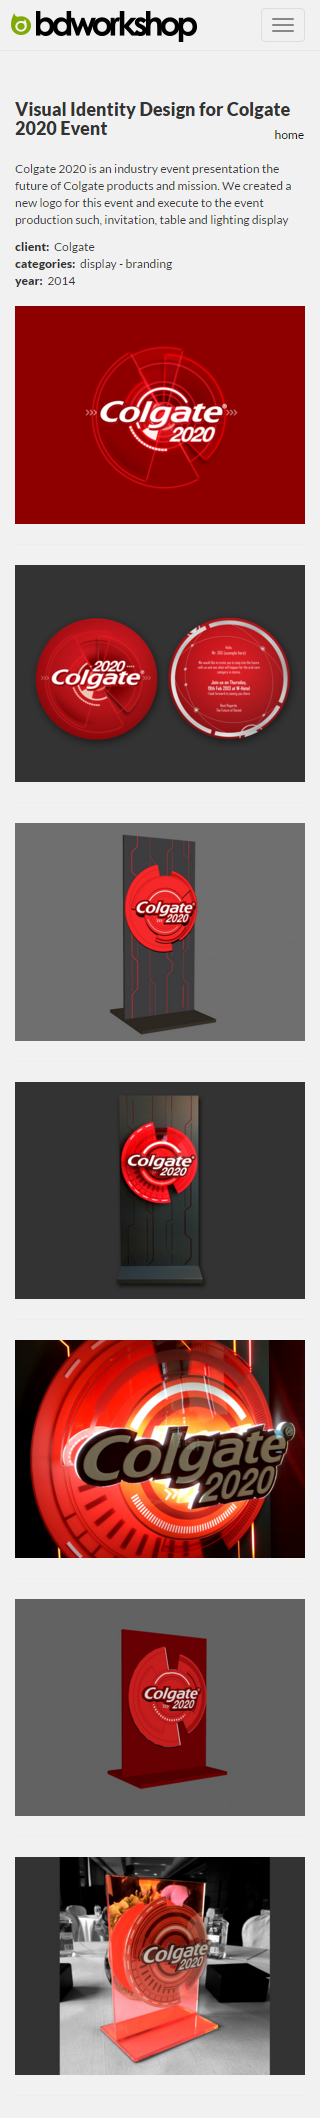 Bdworkshop Website Revamp | Project Page - Visual Identity Design for Colgate 2020 Event